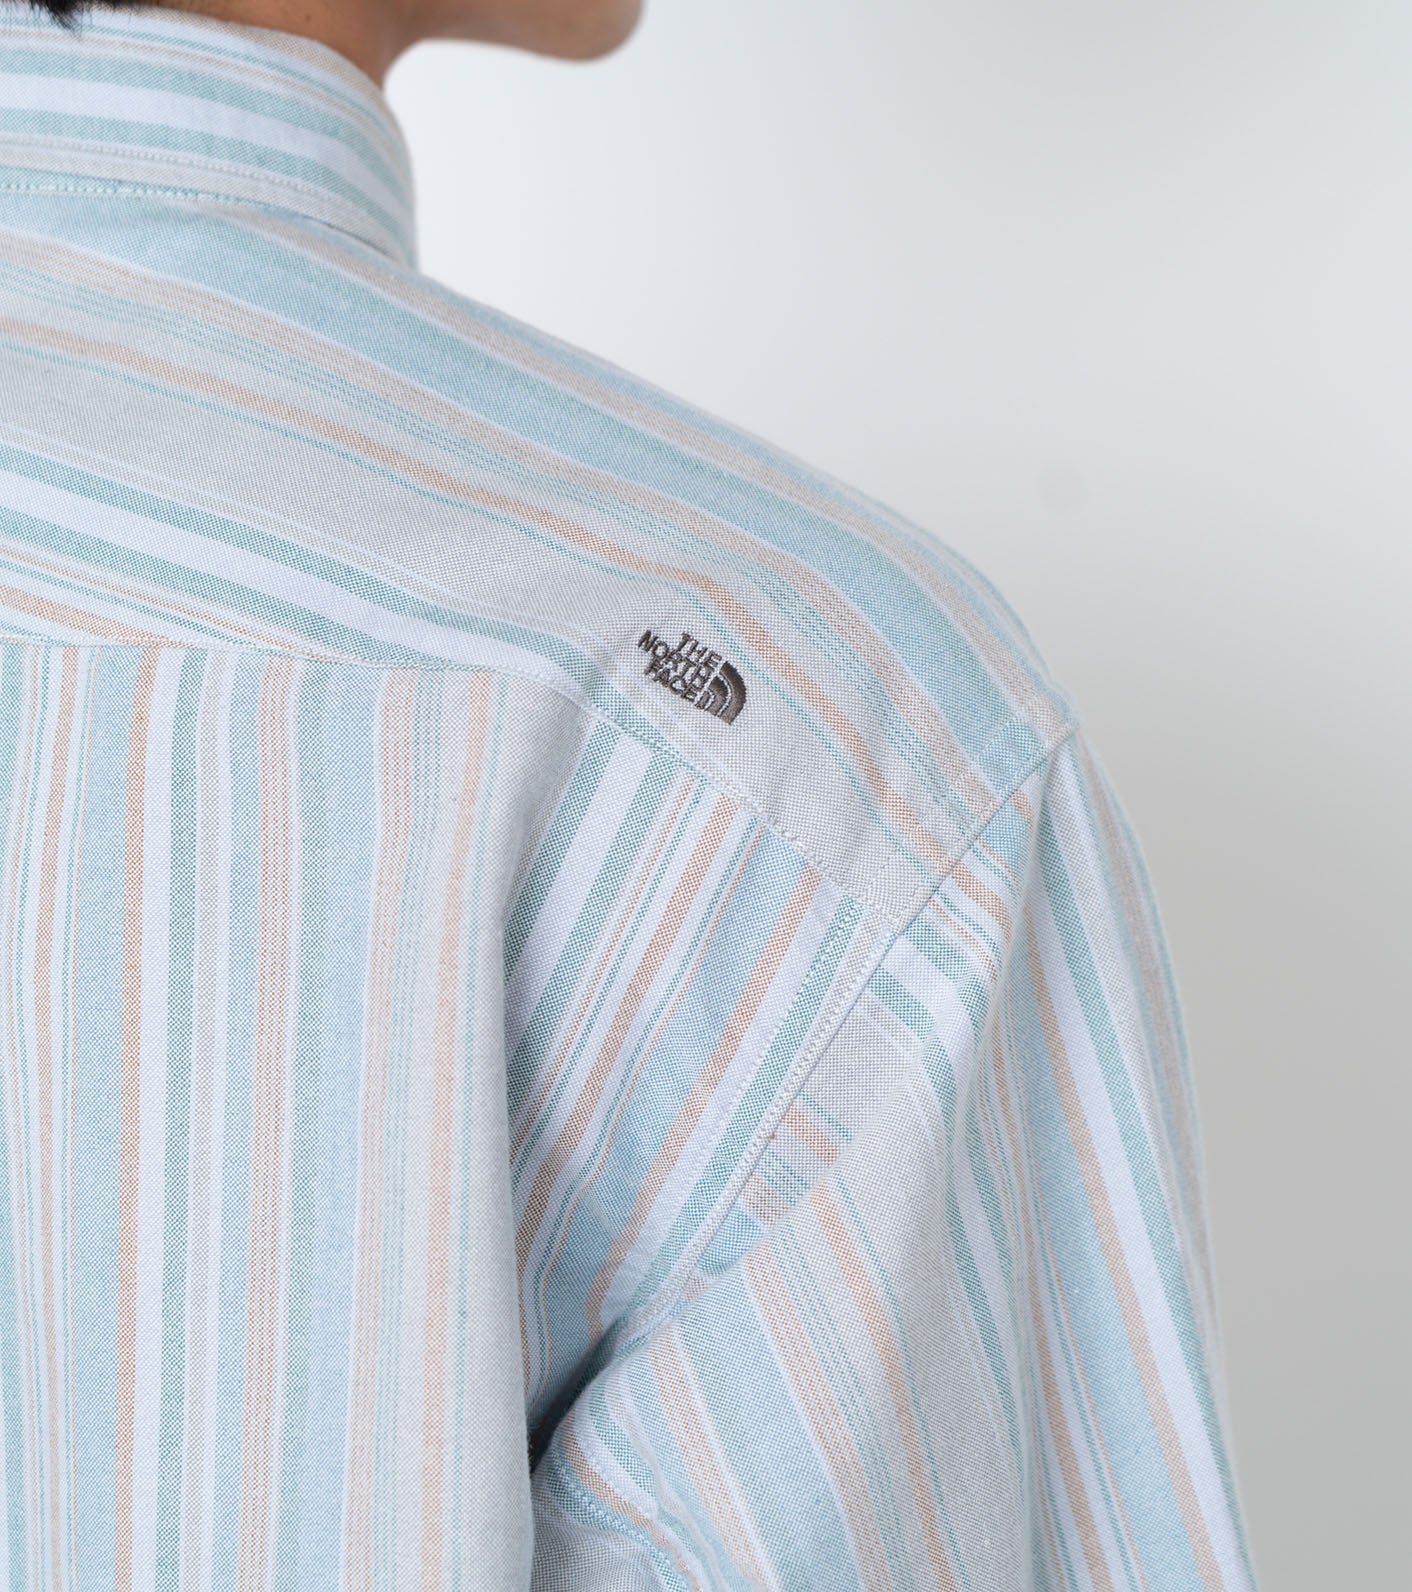 THE NORTH FACE PURPLE LABEL Regular Collar NP Striped Field Shirt